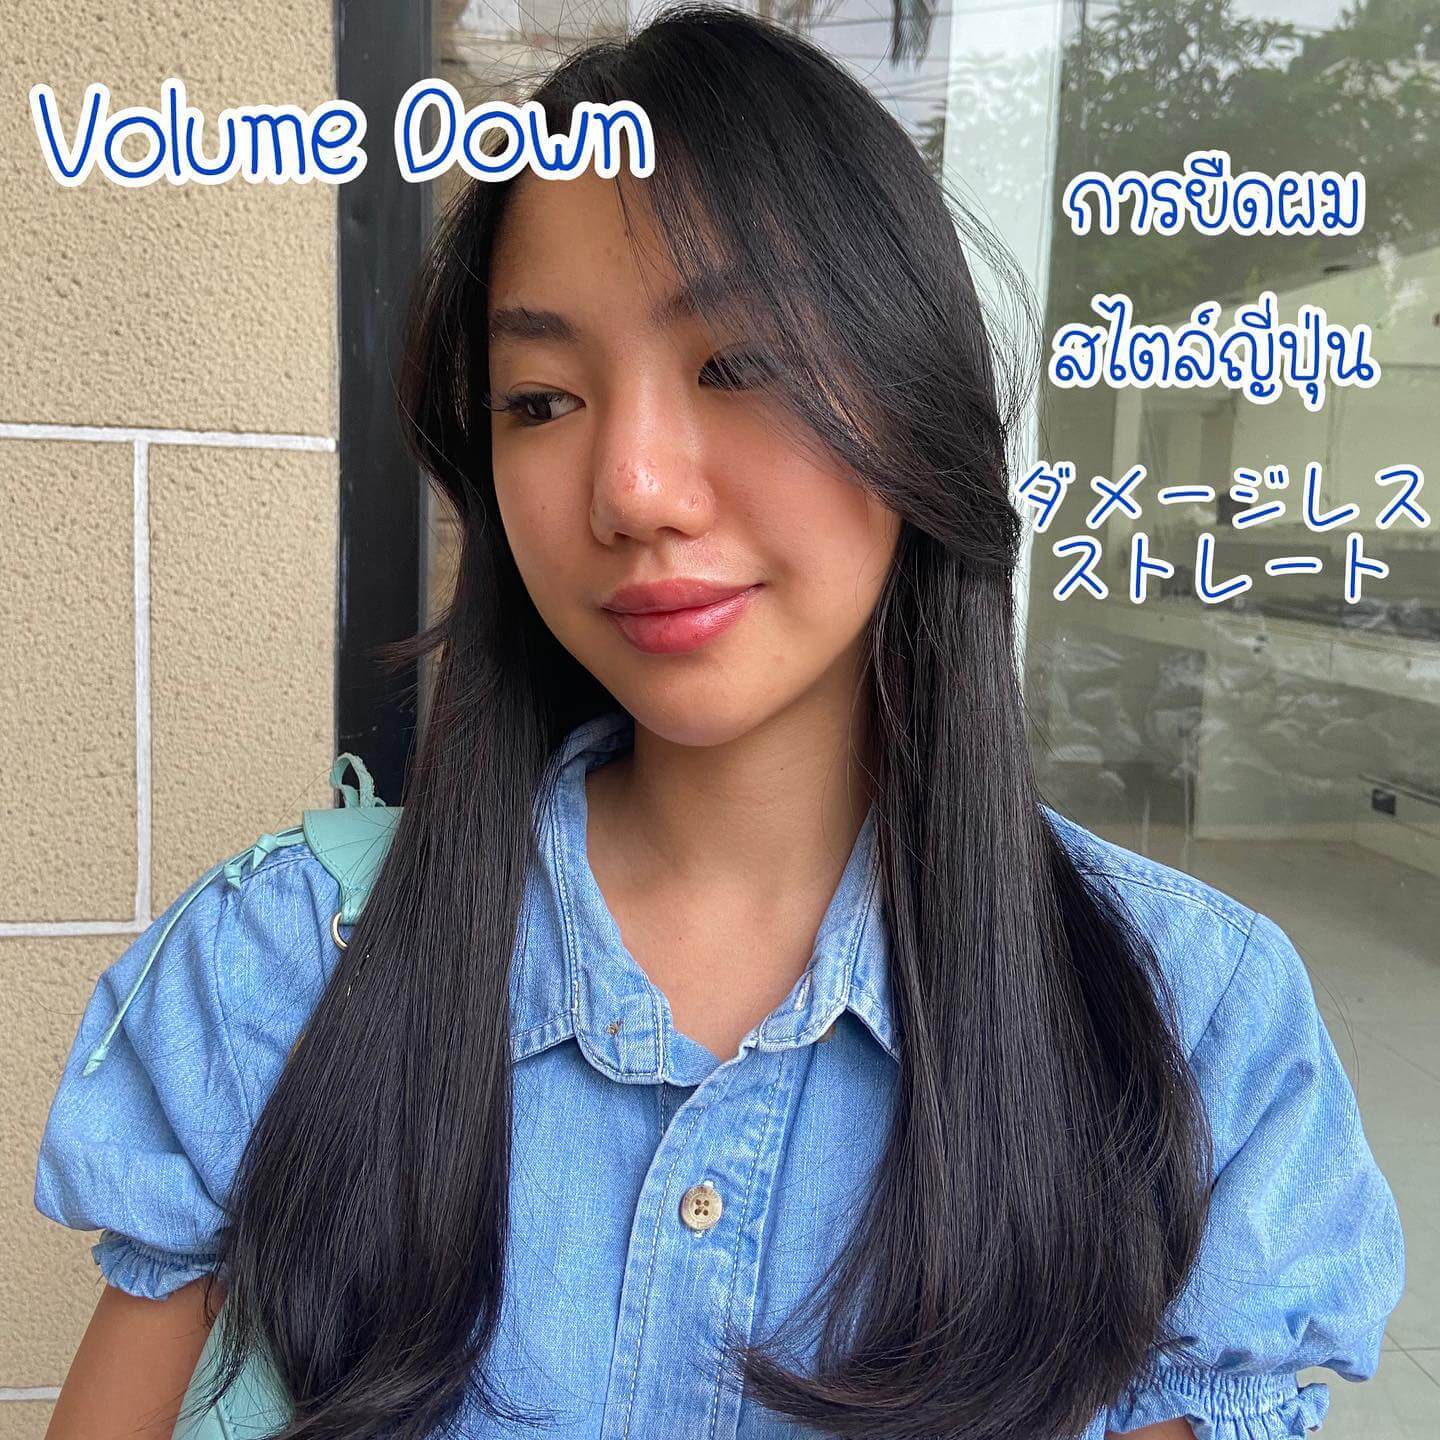 Volume Down
การยืดผมสไตล์ญี่ปุ่น ช่วยให้ผมตรงสวยดูเป็นธรรมชาติ ไม่ลีบแบนจนเกินไป และไม่ทำให้ผมแห้งเสียด้วยค่ะ🥰  ダメージレスストレートはいかがですか？  ダメージレスだから手触り艶もあります️  Stylist Yamada  YAMS hair&cafe  For booking/ご予約、お問い合わせ↓
LINE ID:@qai5573z
Tel:02-163-4973  Business hours/営業時間↓
9:00 - 18:00
Closed on Wednesday,2nd & 4th Thursday  #ร้านทำผมญี่ปุ่น #YAMShaircafe #ตัดผมญี่ปุ่น #ยืดผมญี่ปุ่น #ดัดผมญี่ปุ่น #ร้านทำผม #バンコク生活 #バンコク在住 #バンコク暮らし #バンコク子連れ美容室 #バンコク美容室